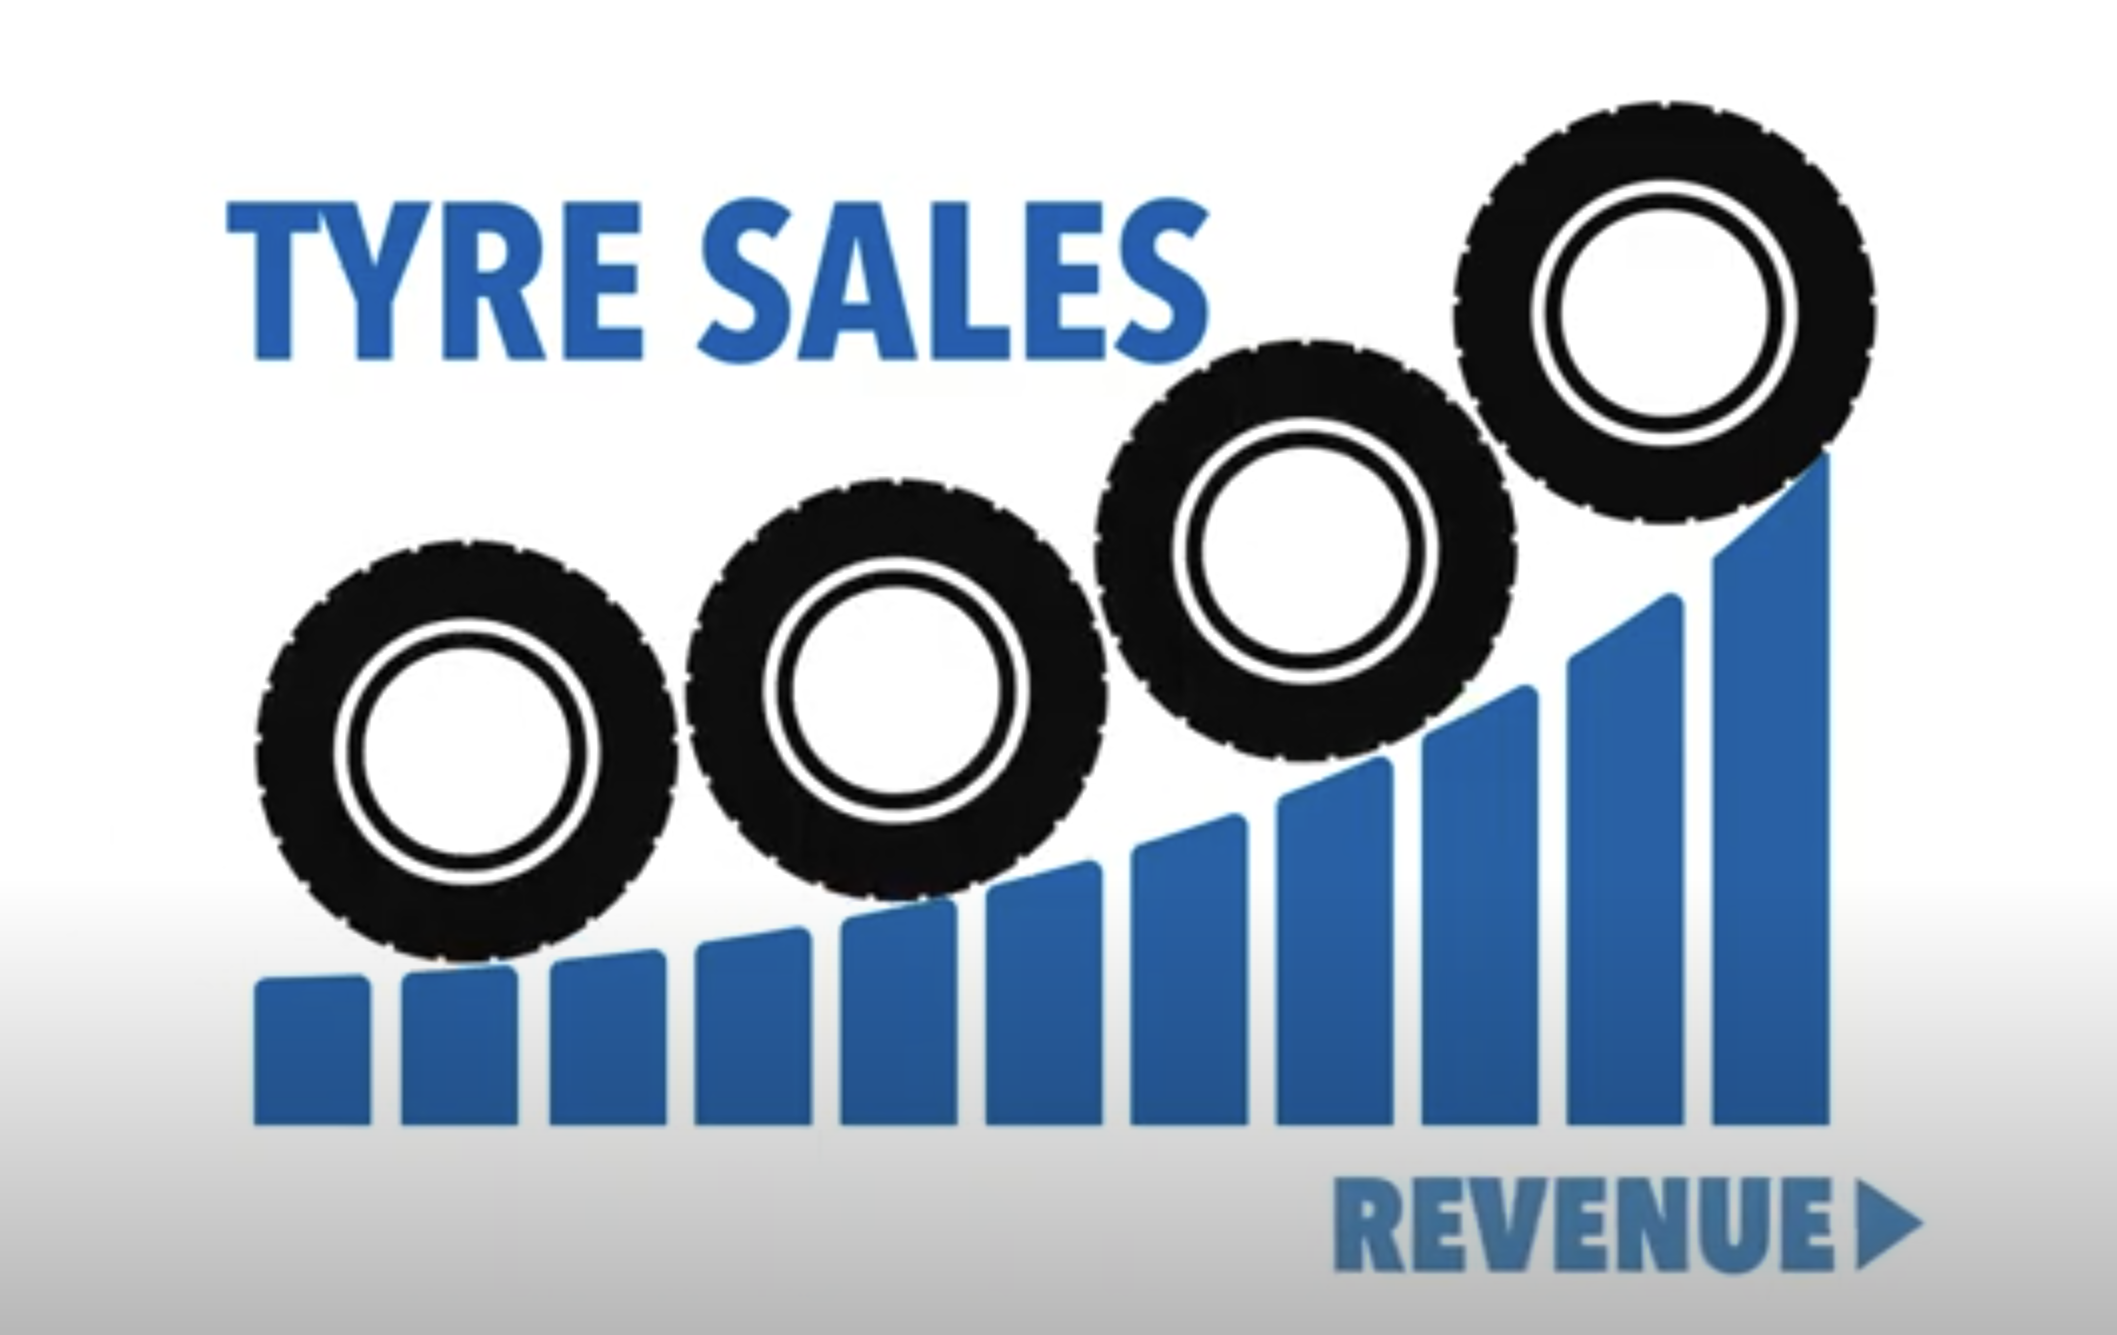 Tyreclick average order value tyre sales